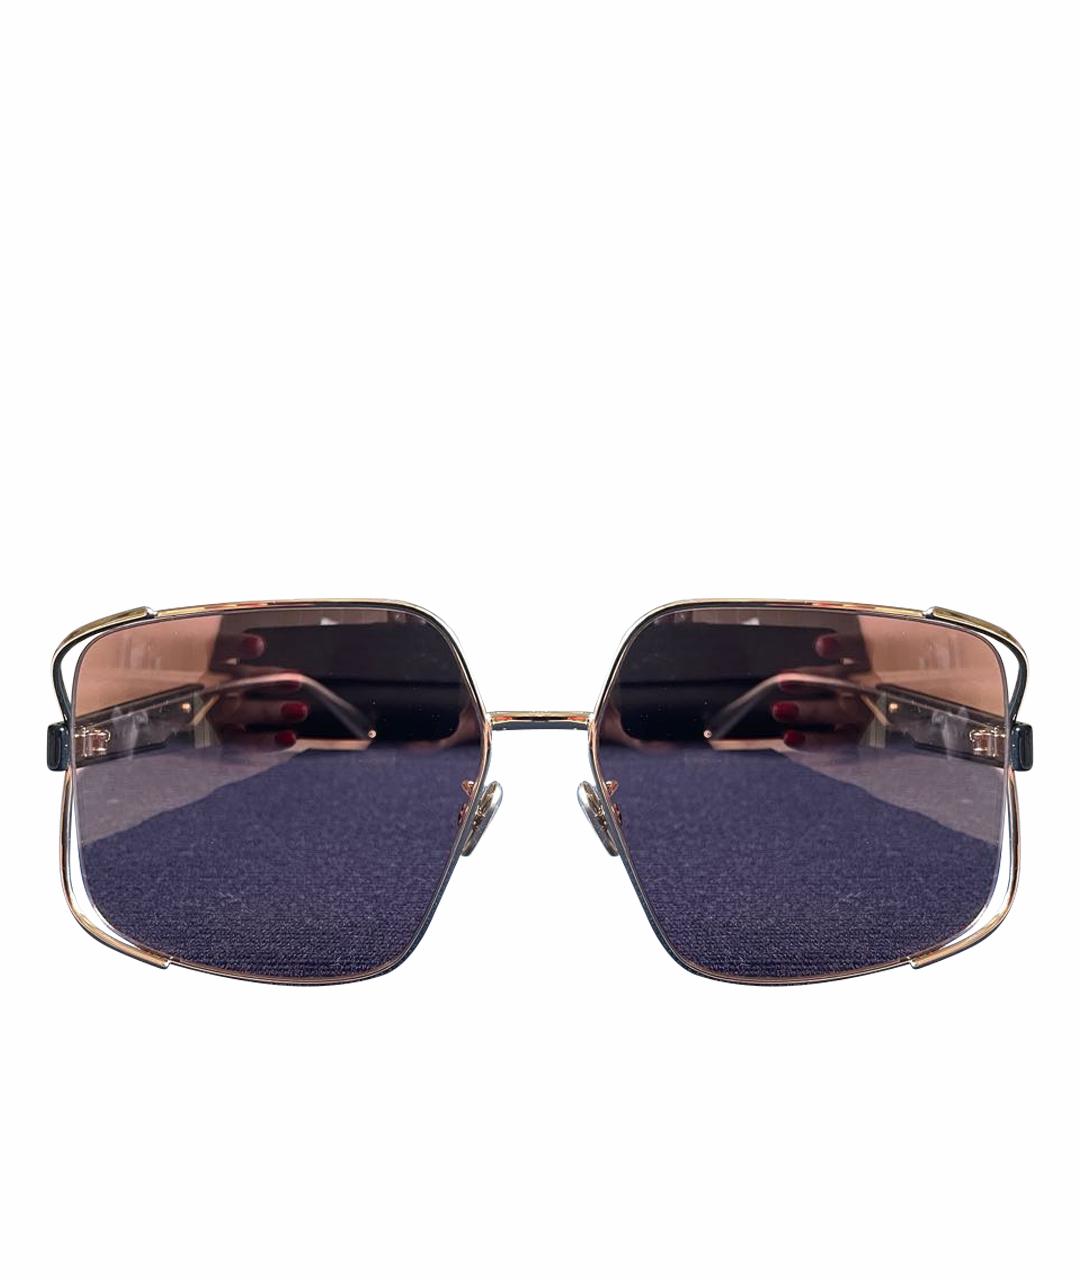 CHRISTIAN DIOR PRE-OWNED Золотые металлические солнцезащитные очки, фото 1